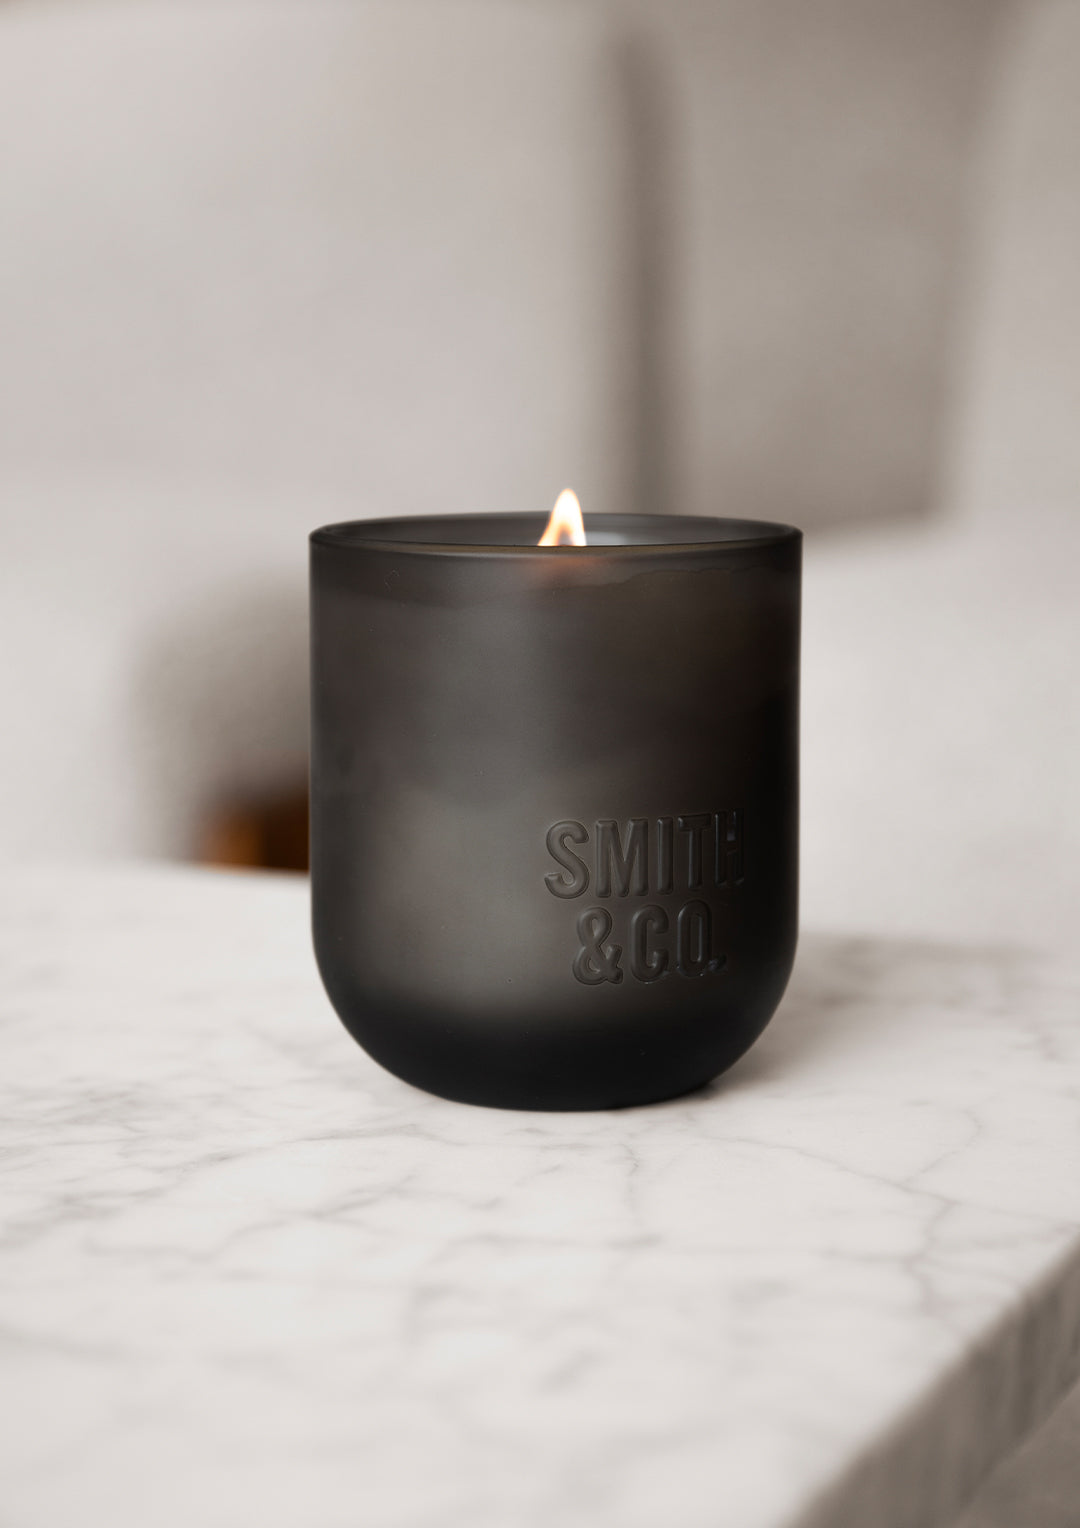 Smith & Co. Candle 250g - Tabac & Cedar Wood